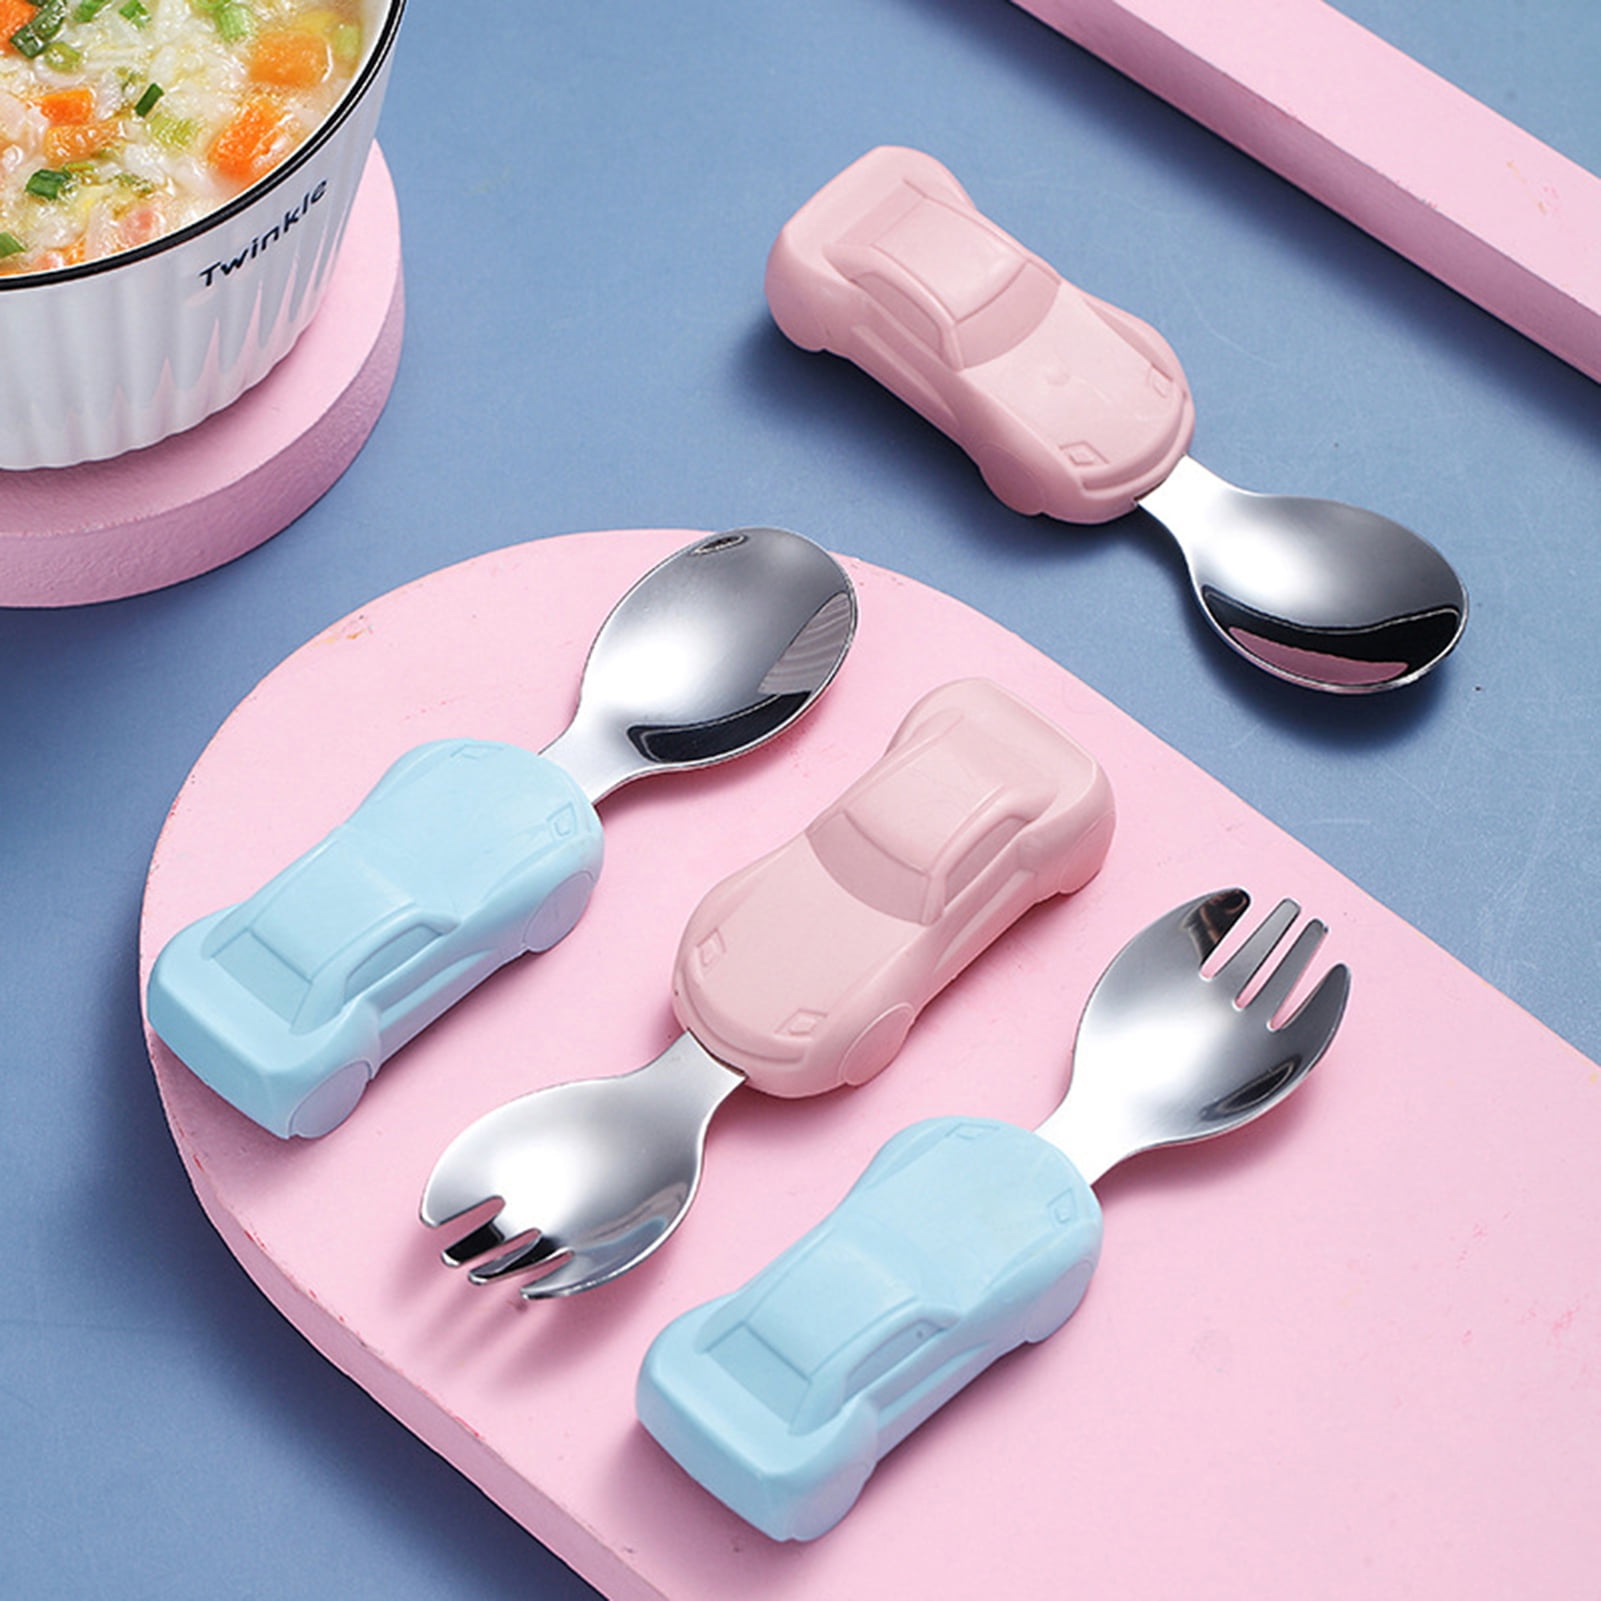 Baby Dishes Stainless Steel Spoon Fork Utensils Set Learning Eating Tableware 